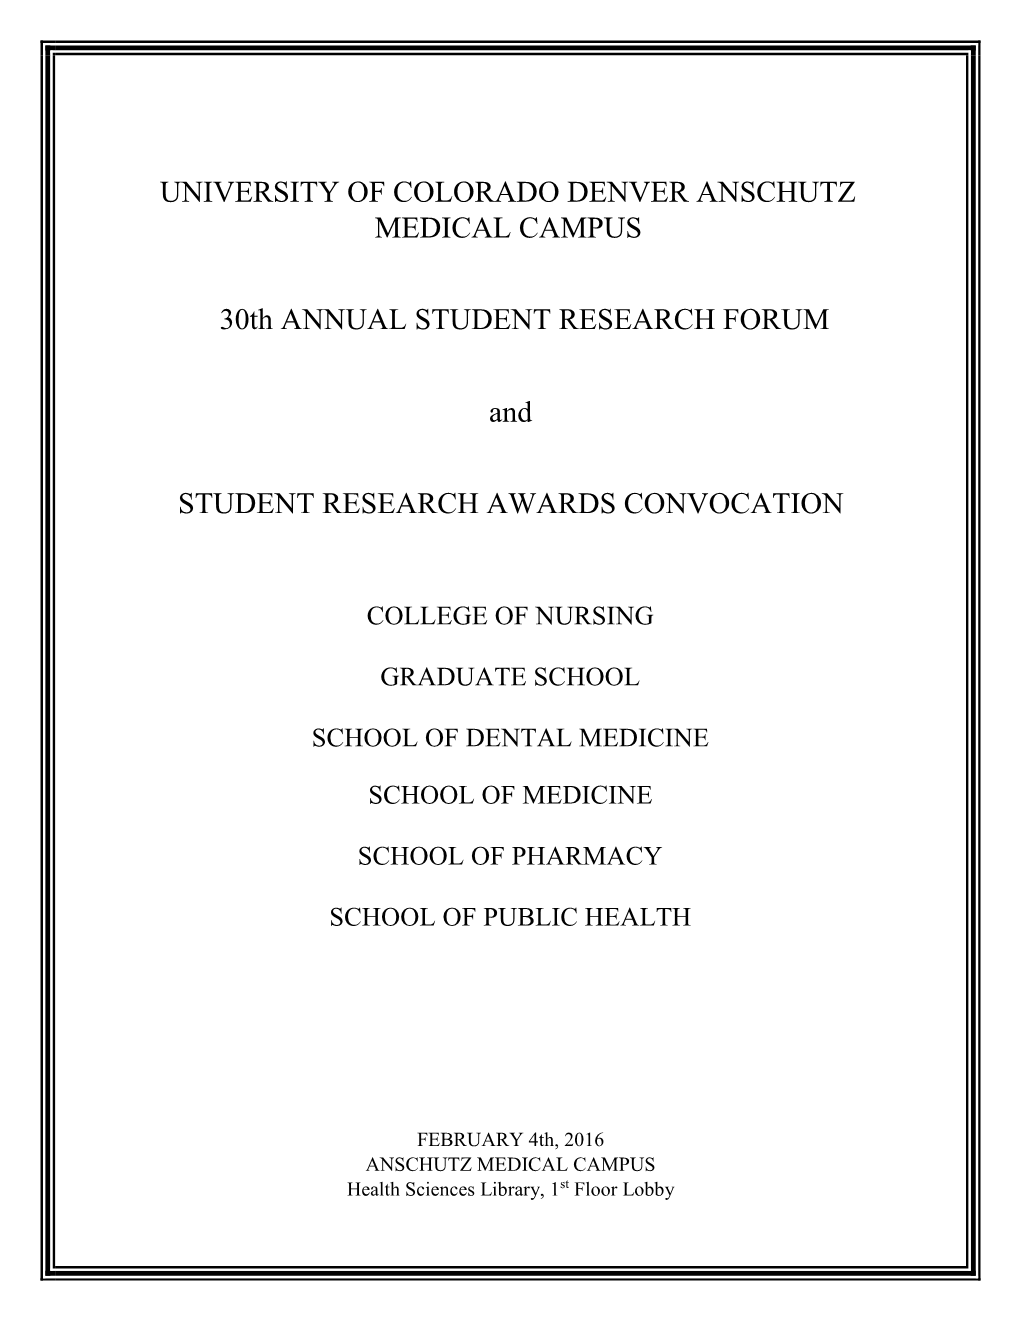 University of Colorado Denver Anschutz Medical Campus